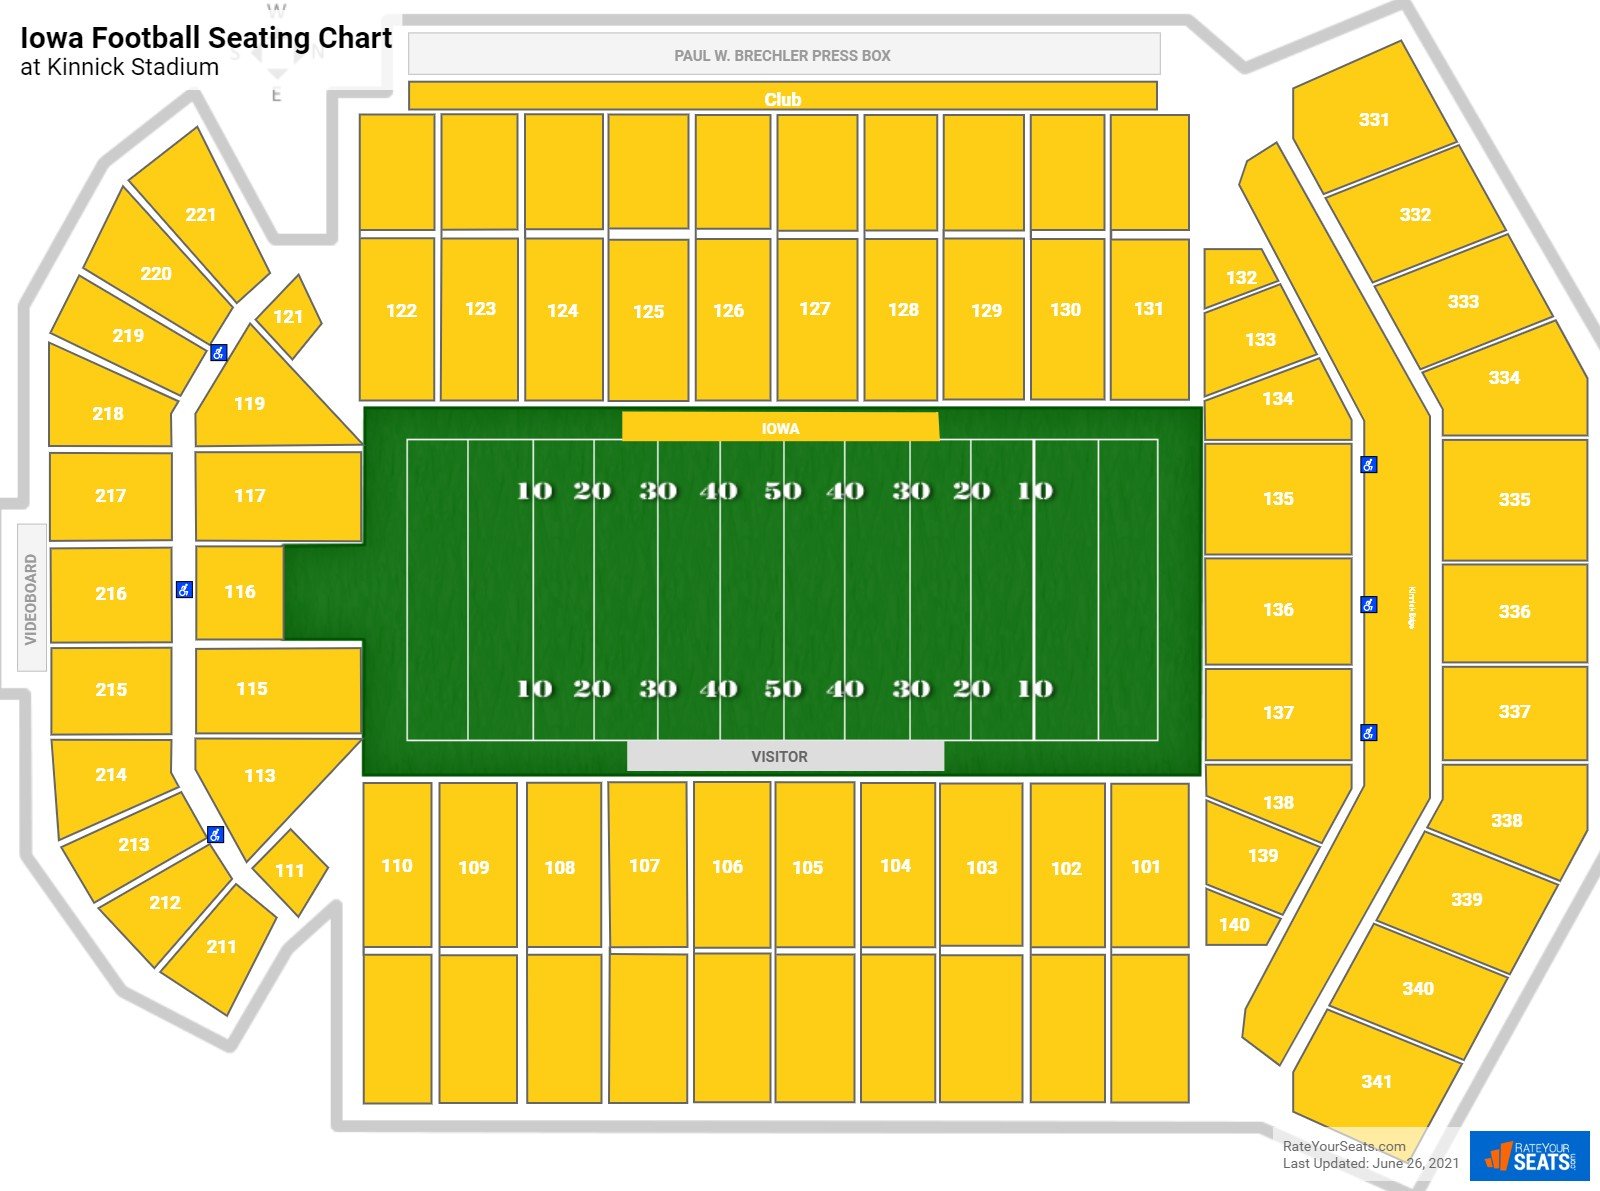 Iowa Hawkeyes Seating Chart at Kinnick Stadium